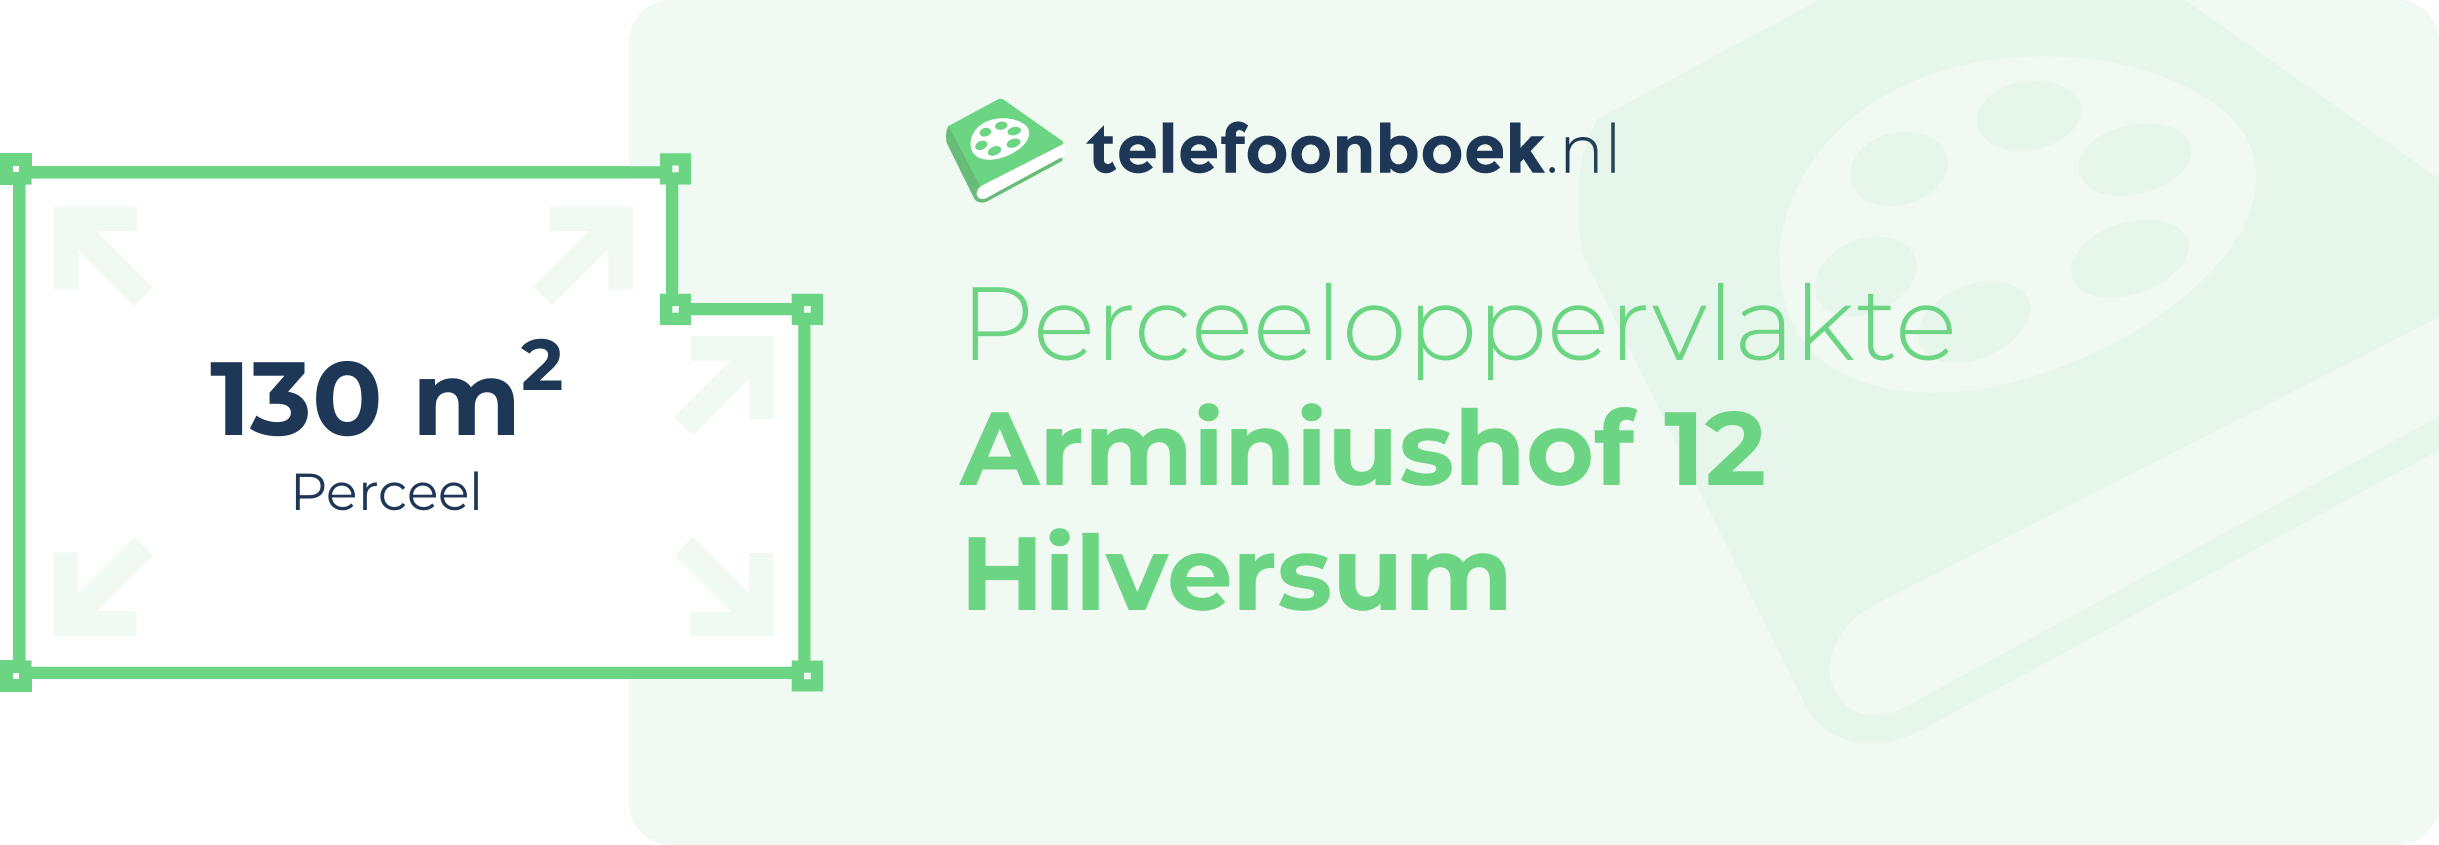 Perceeloppervlakte Arminiushof 12 Hilversum